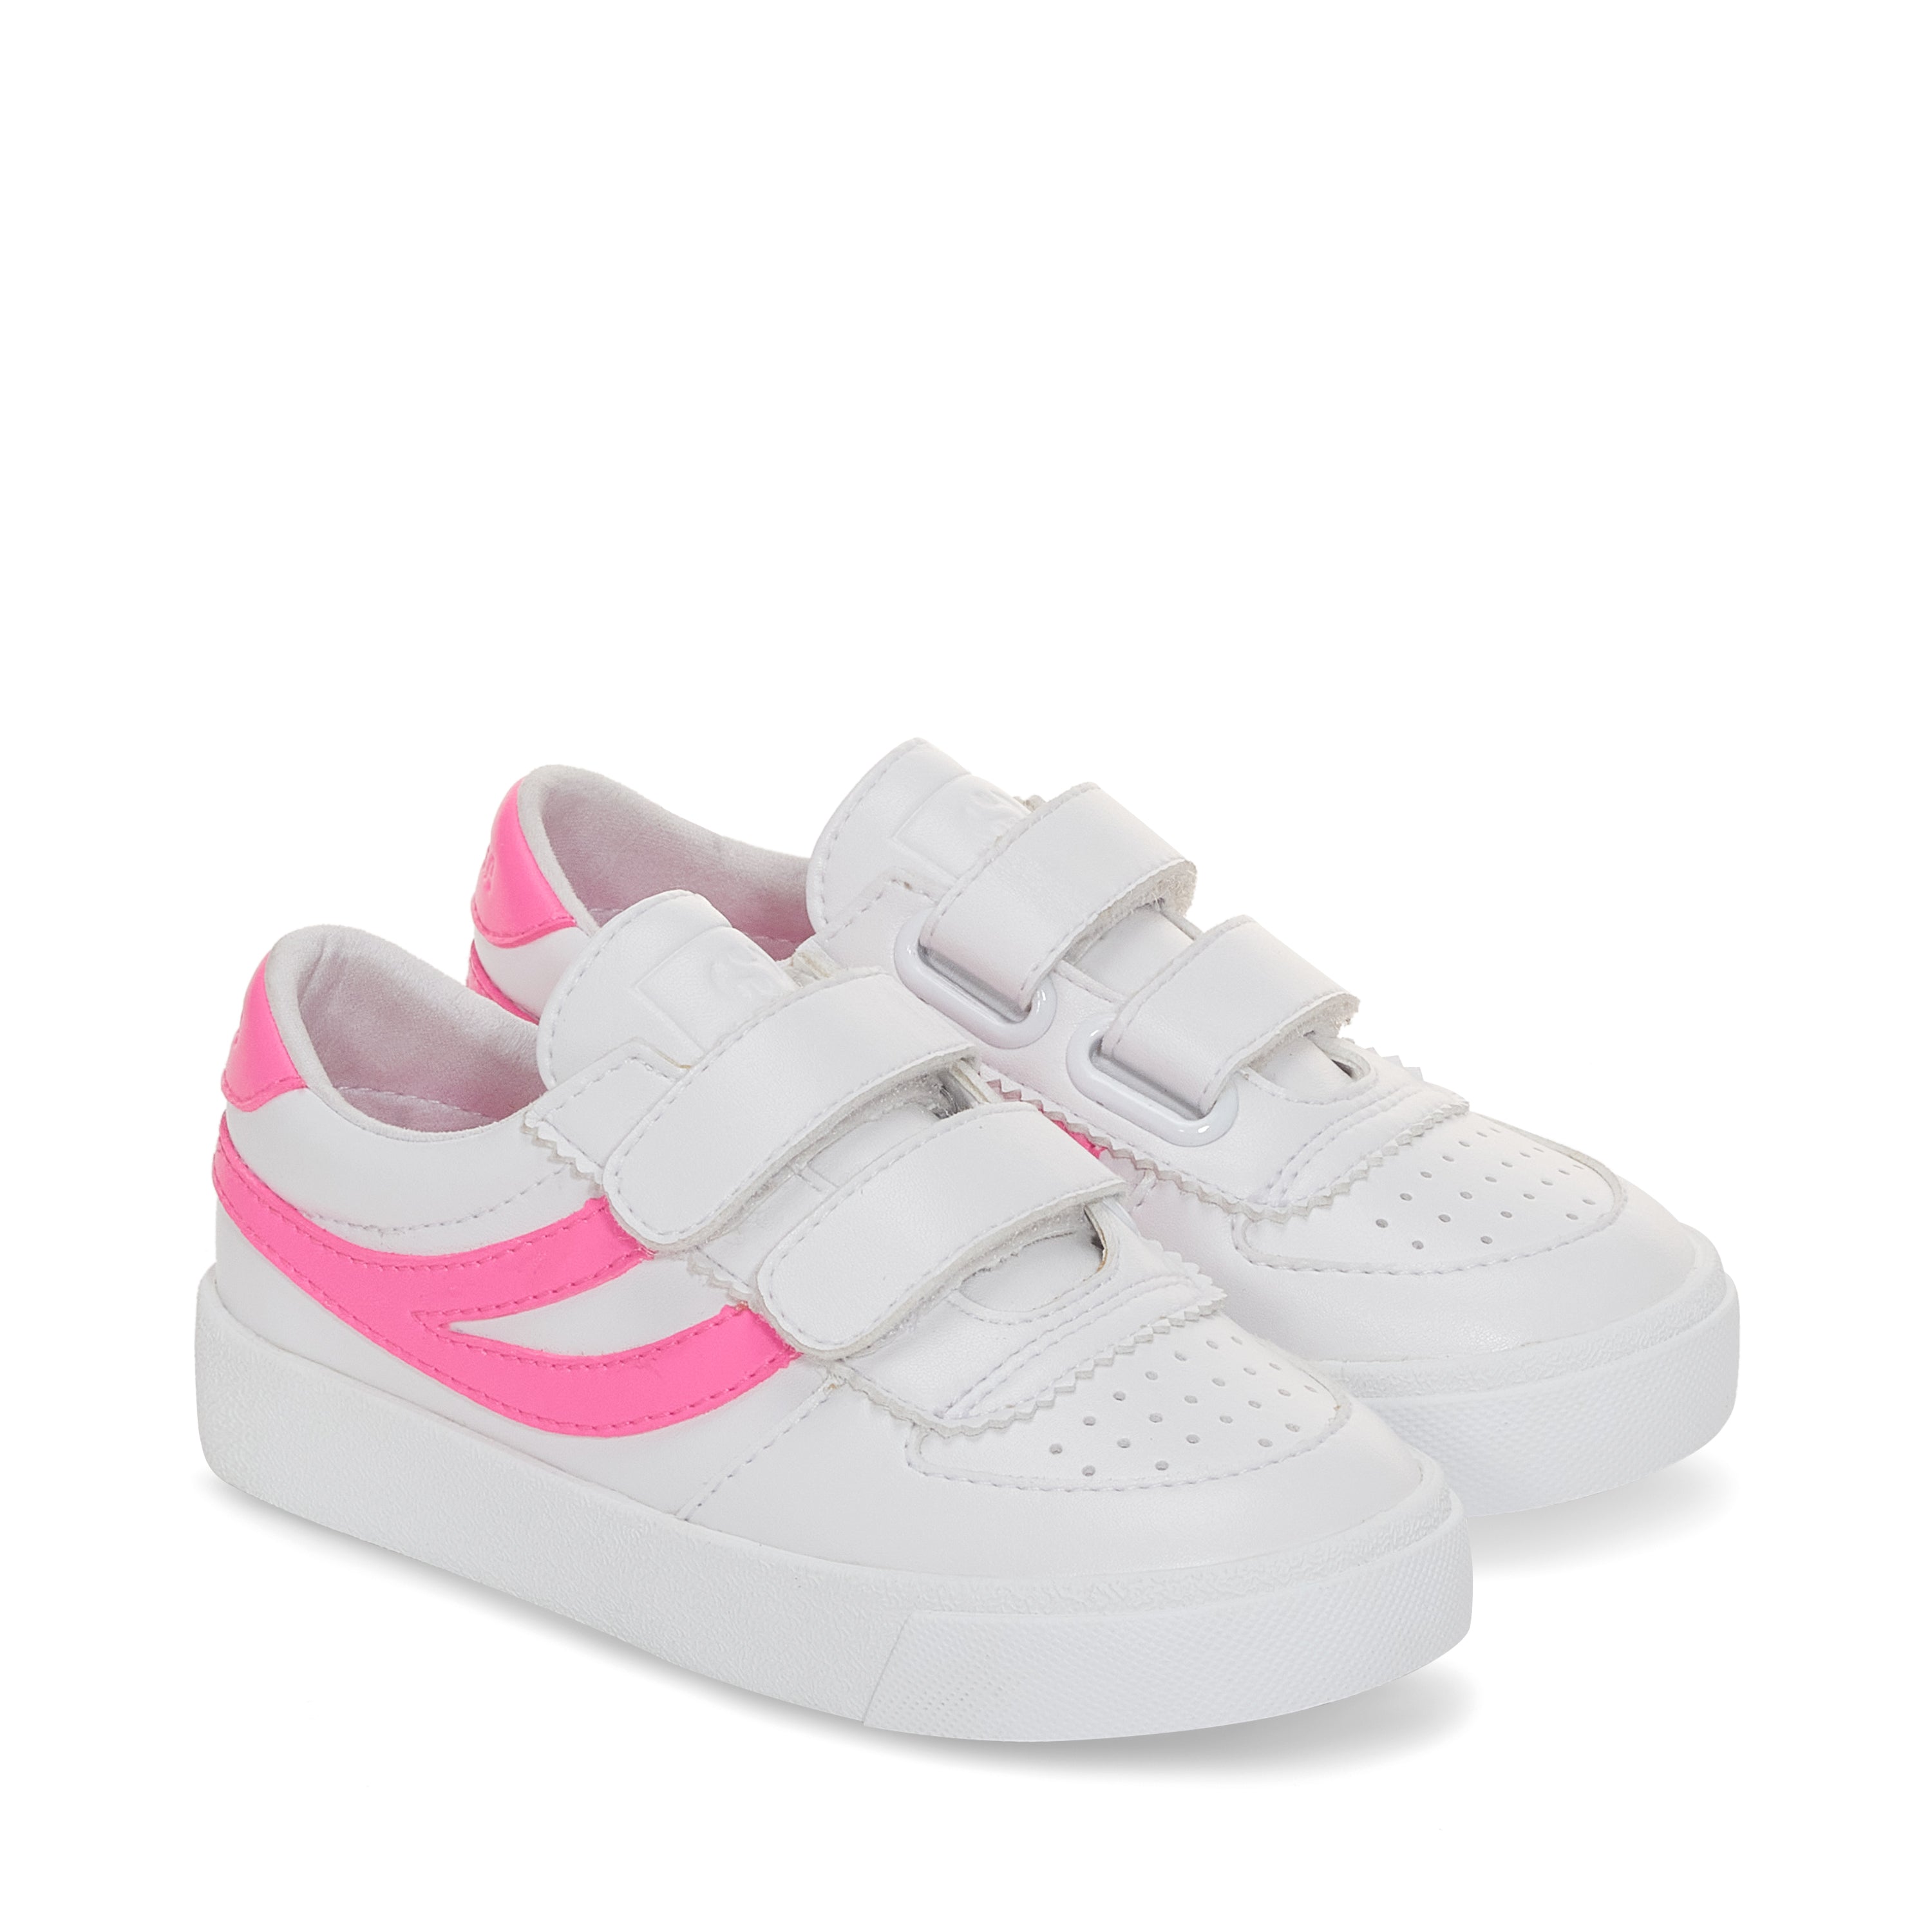 White-Neon Pink